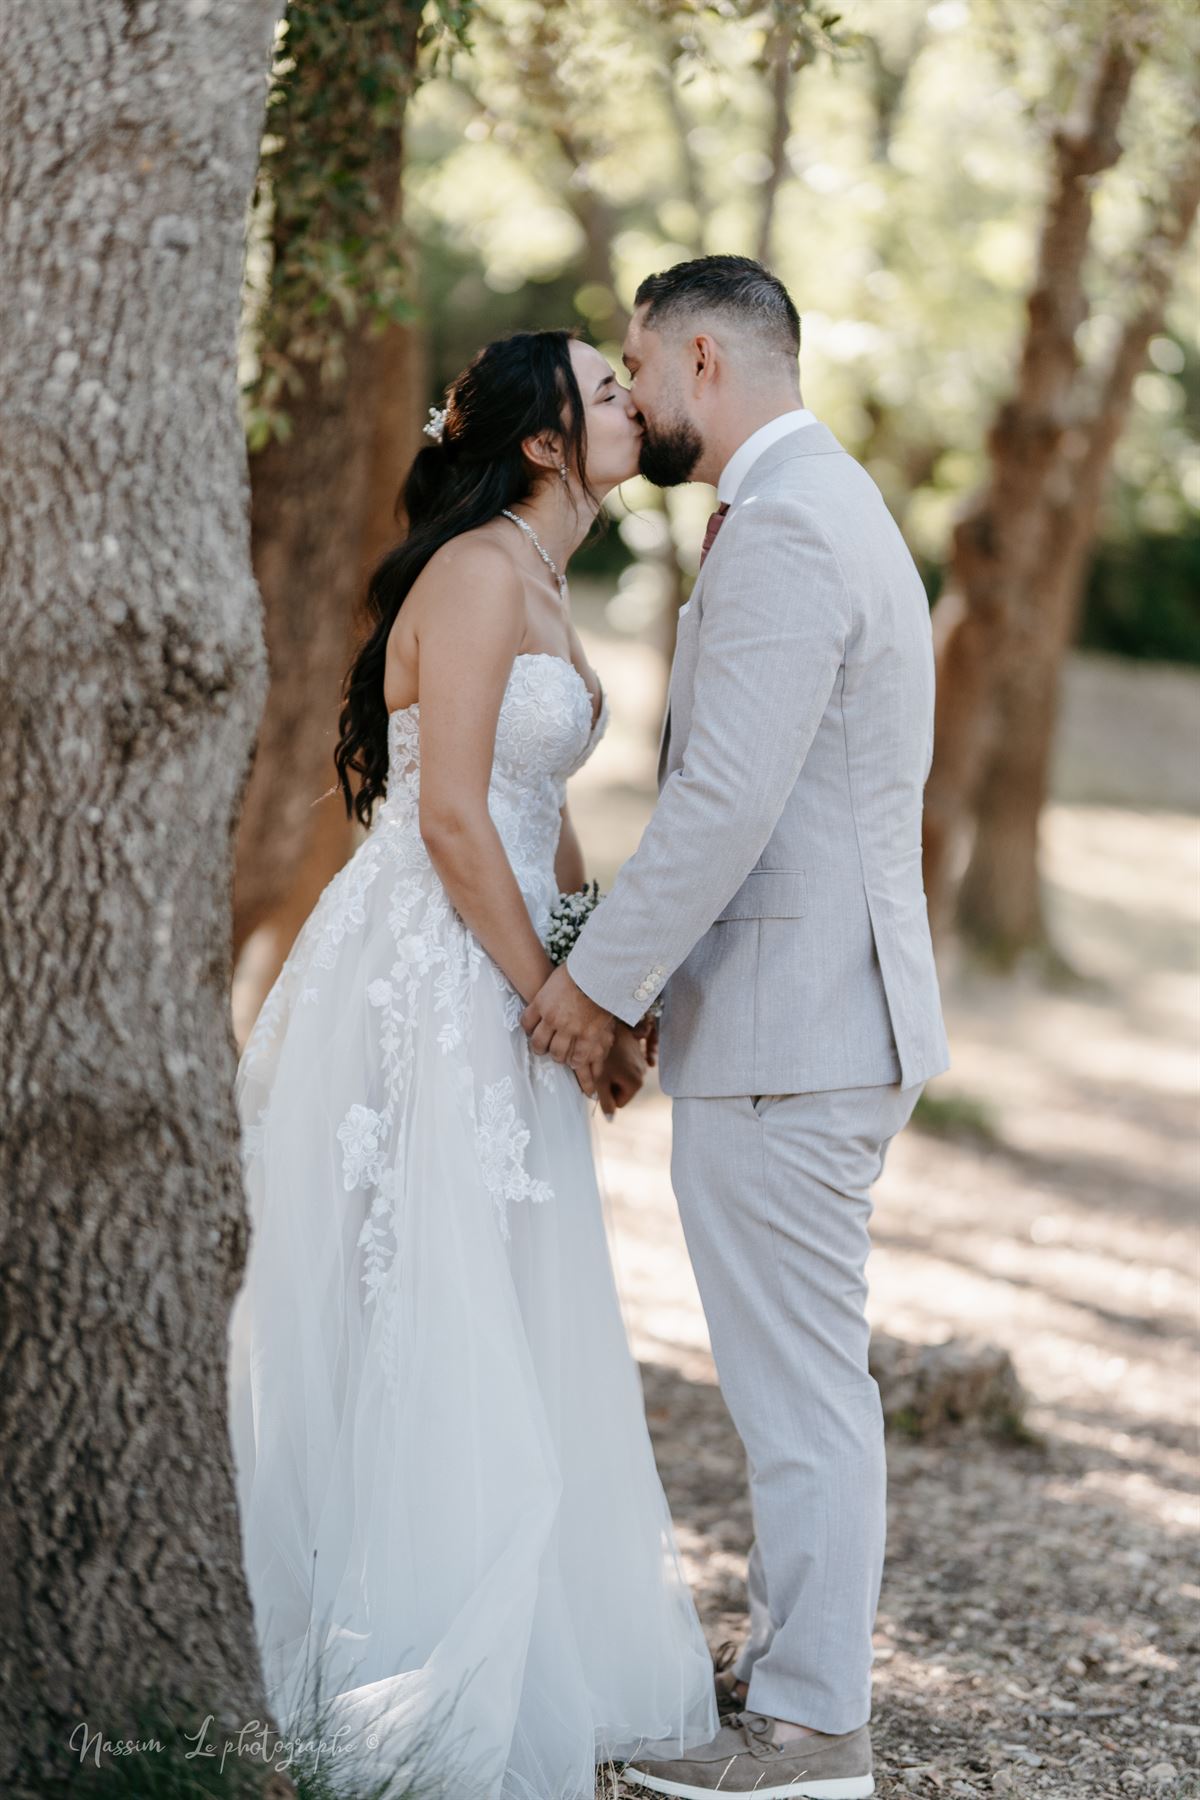 Wedding Photographer Aix en Provence: Capturing Love's Embrace 6